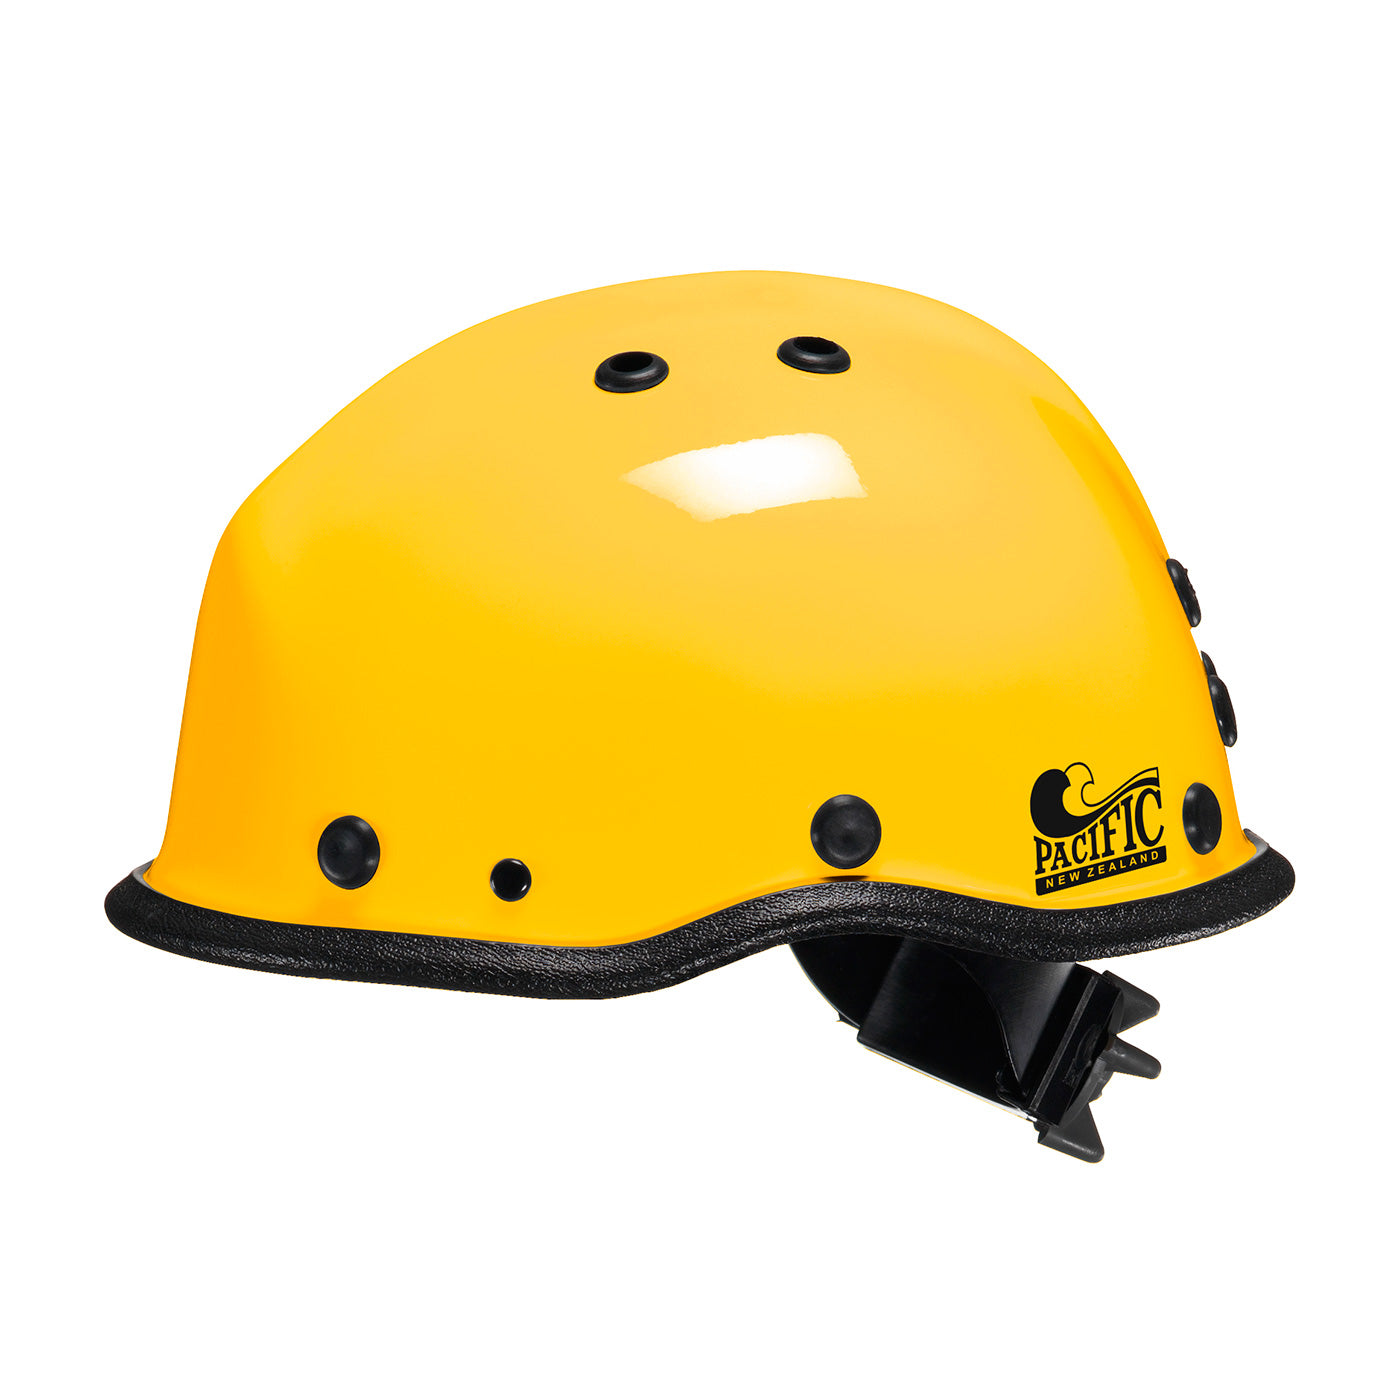 WR5 Water Rescue Helmet